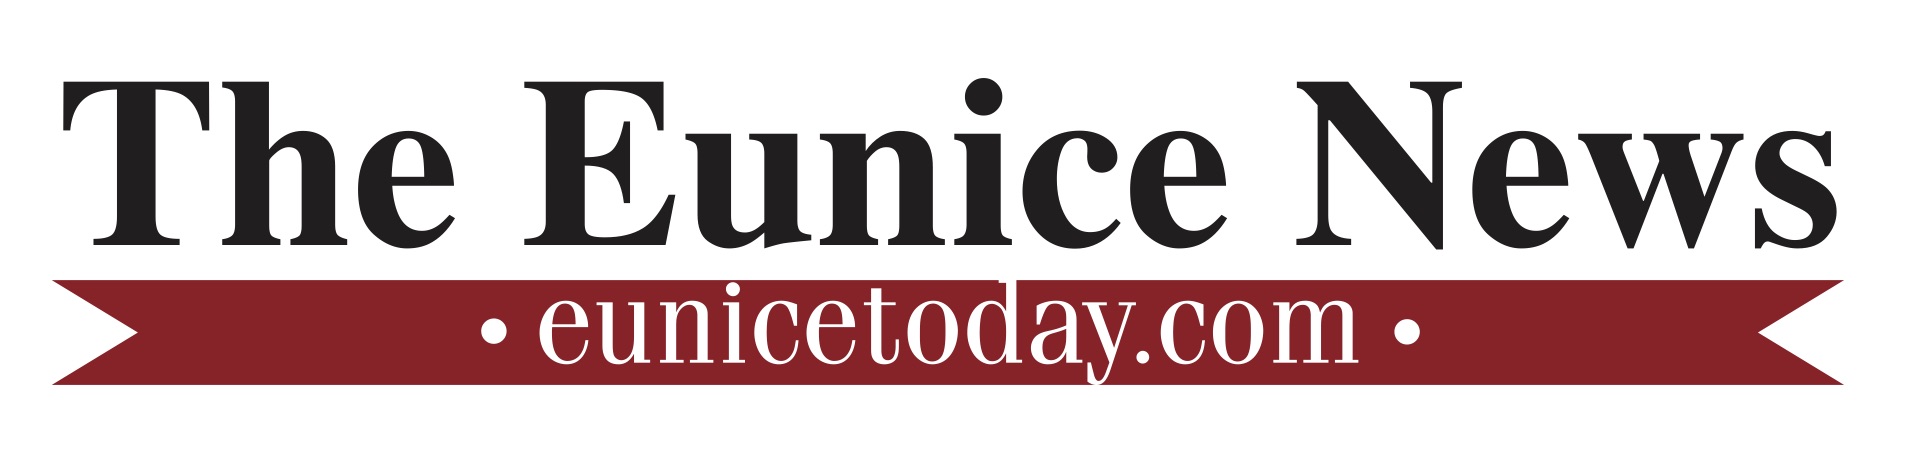 Eunice News Home